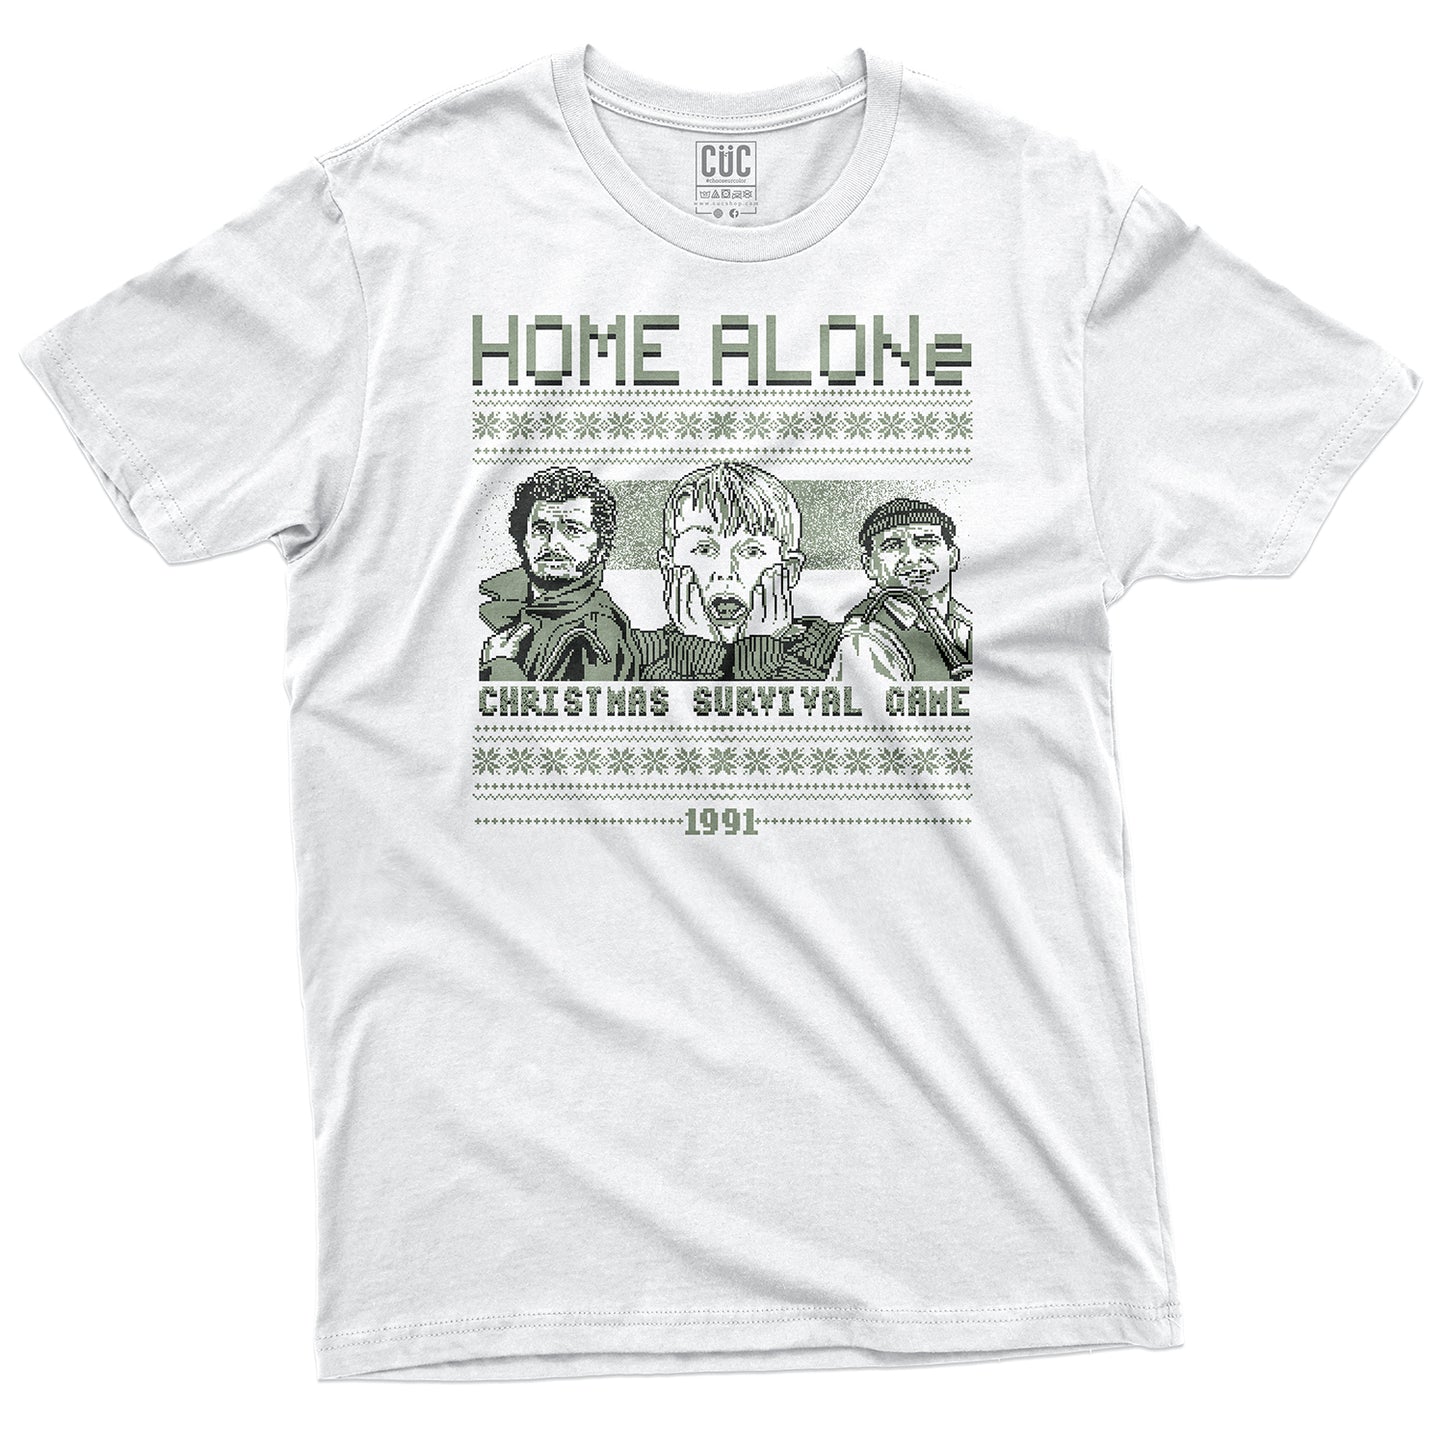 CUC T-Shirt HOME ALONE VG - Retro Games - Natale #chooseurcolor